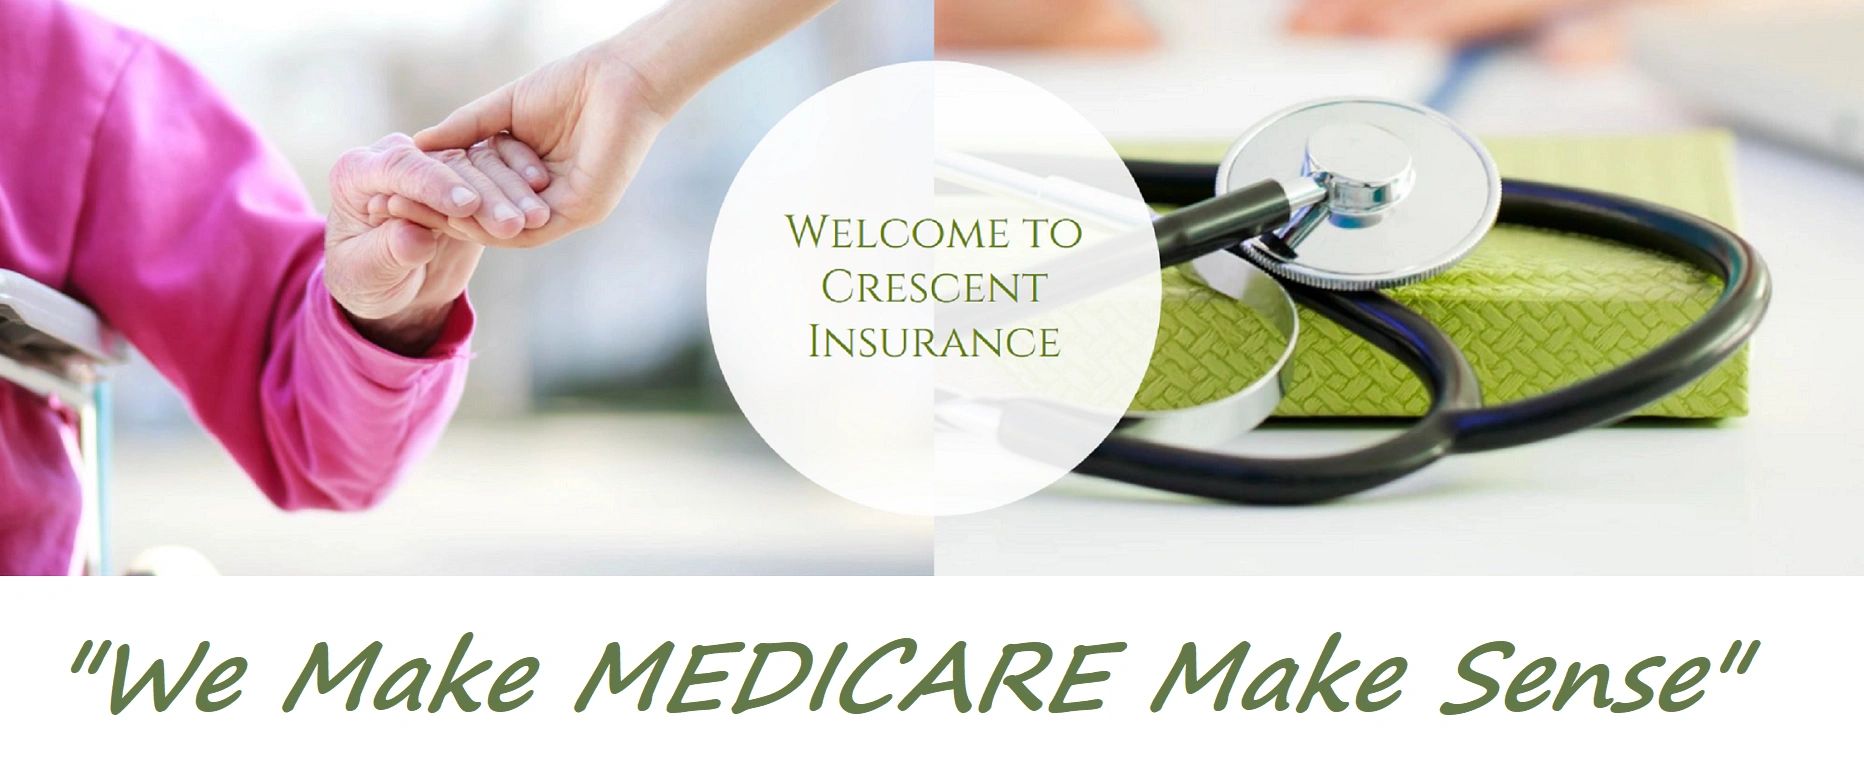 Crescent Insurance